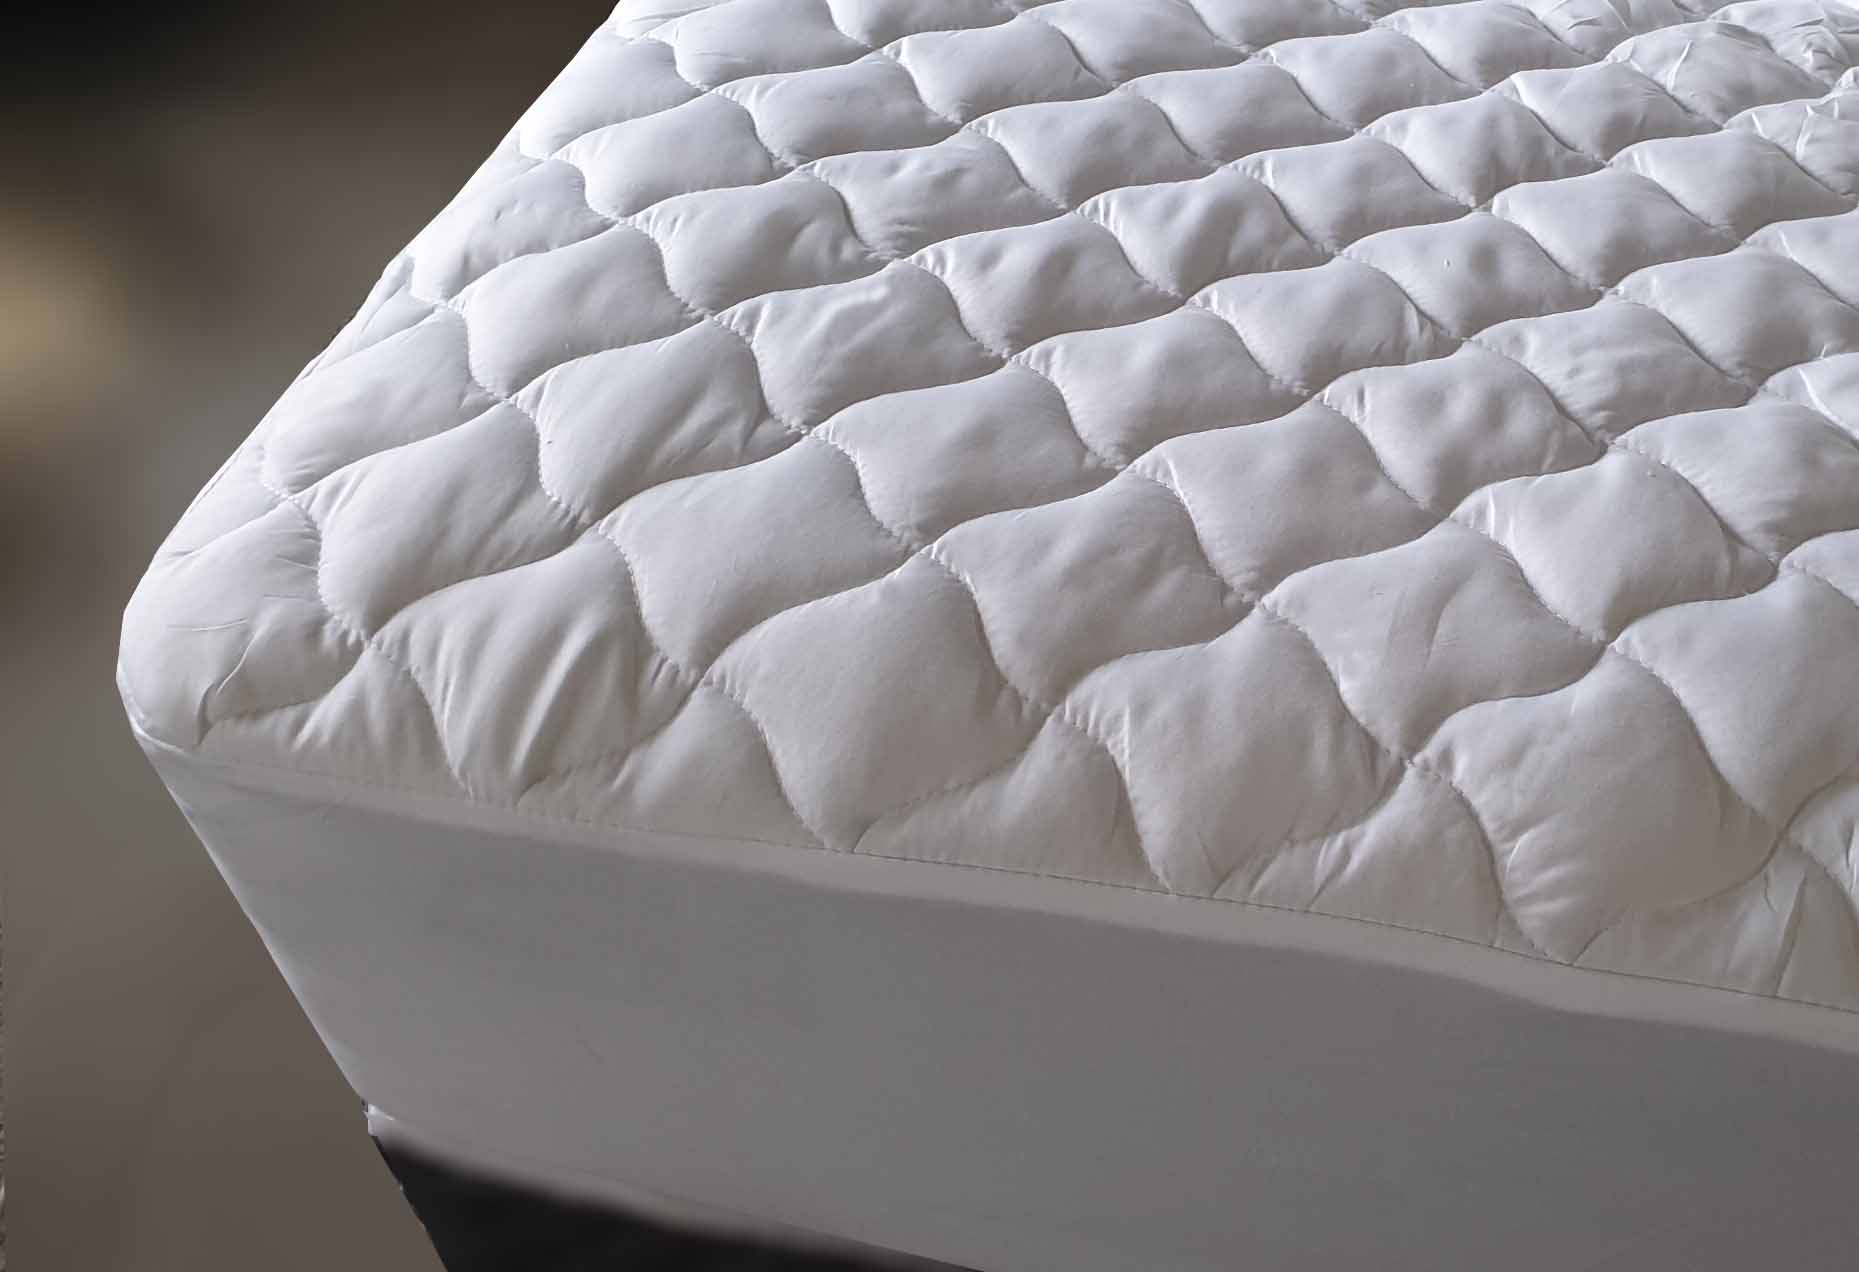 dots certified mattress protector